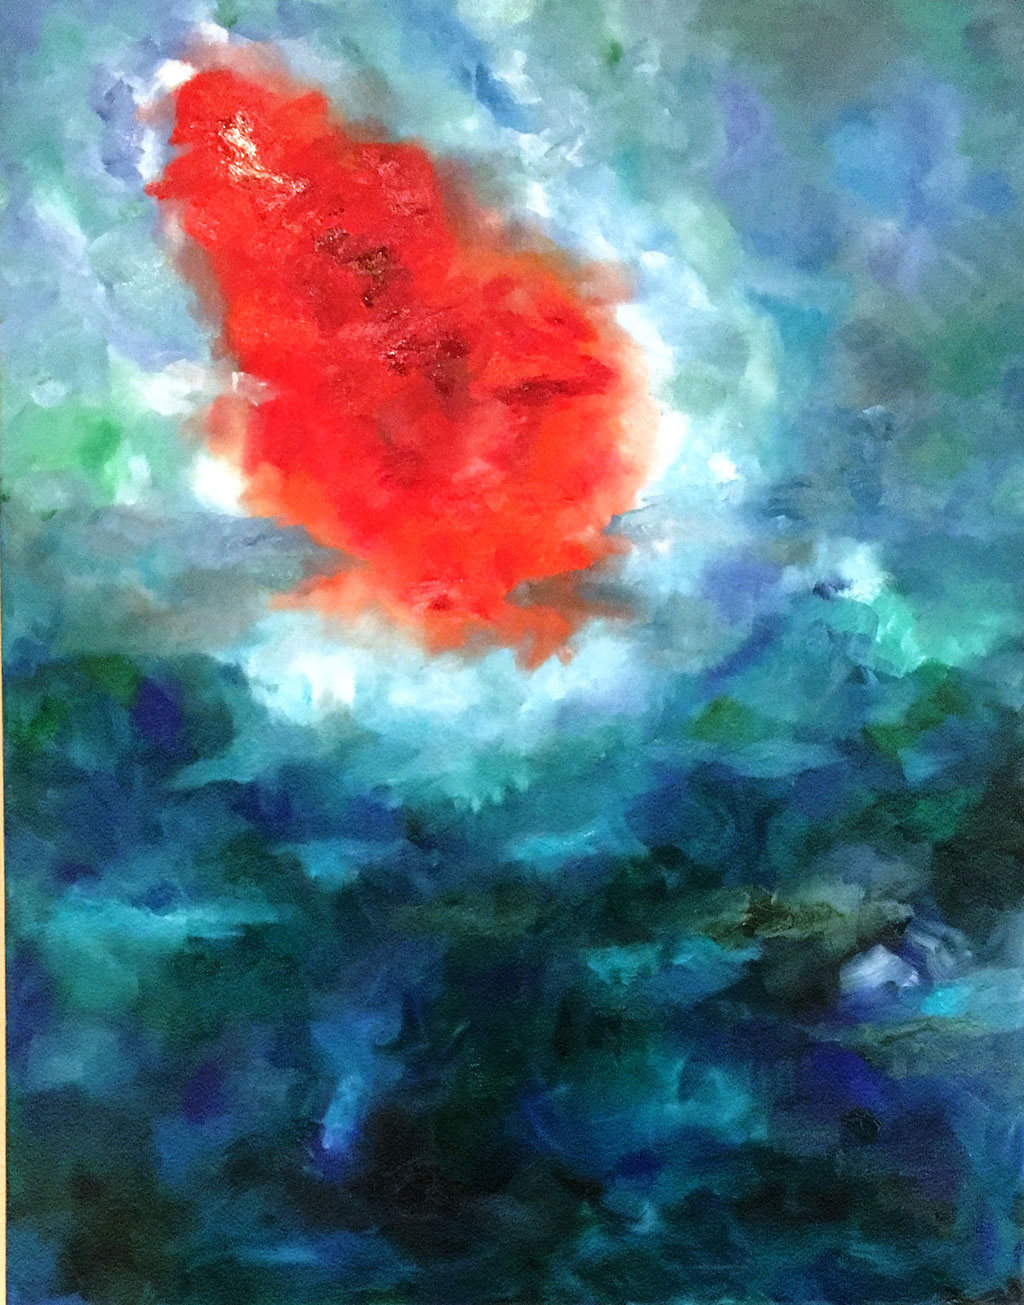 "Blut", Öl auf Leinwand, 70 cm x 90 cm, 2018